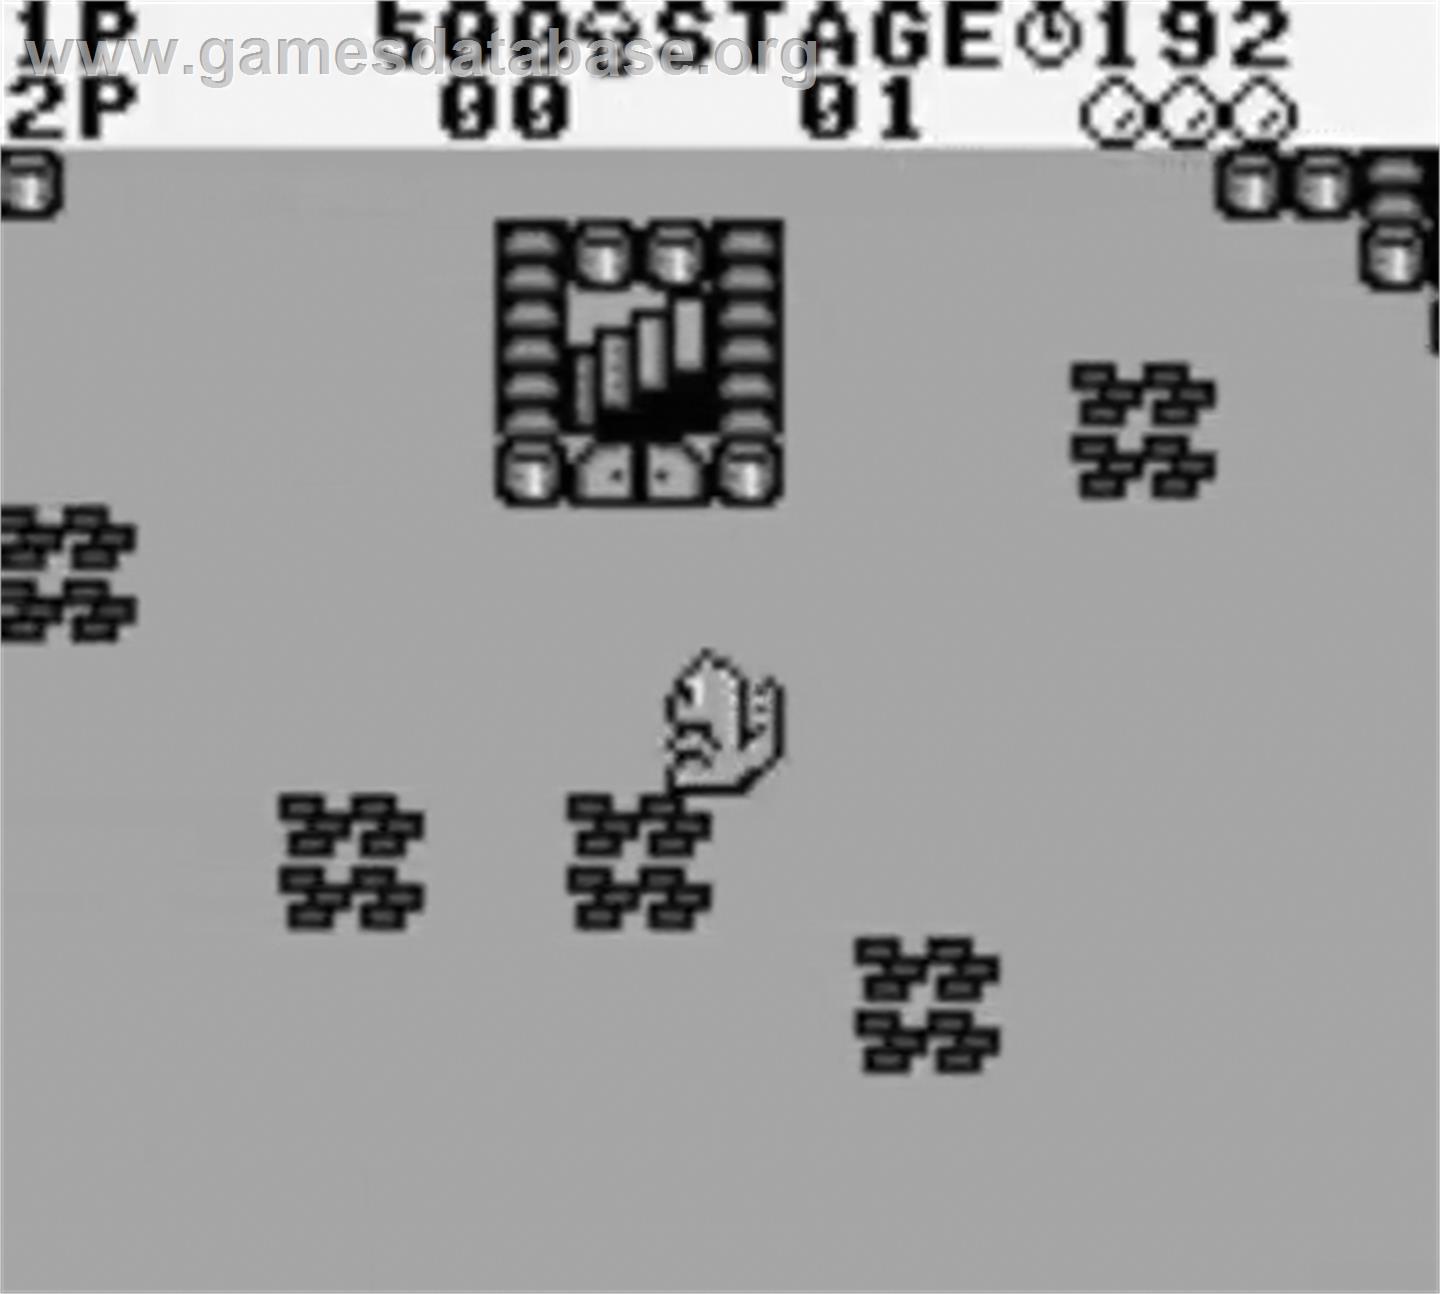 Boomer's Adventure in ASMIK World - Nintendo Game Boy - Artwork - In Game